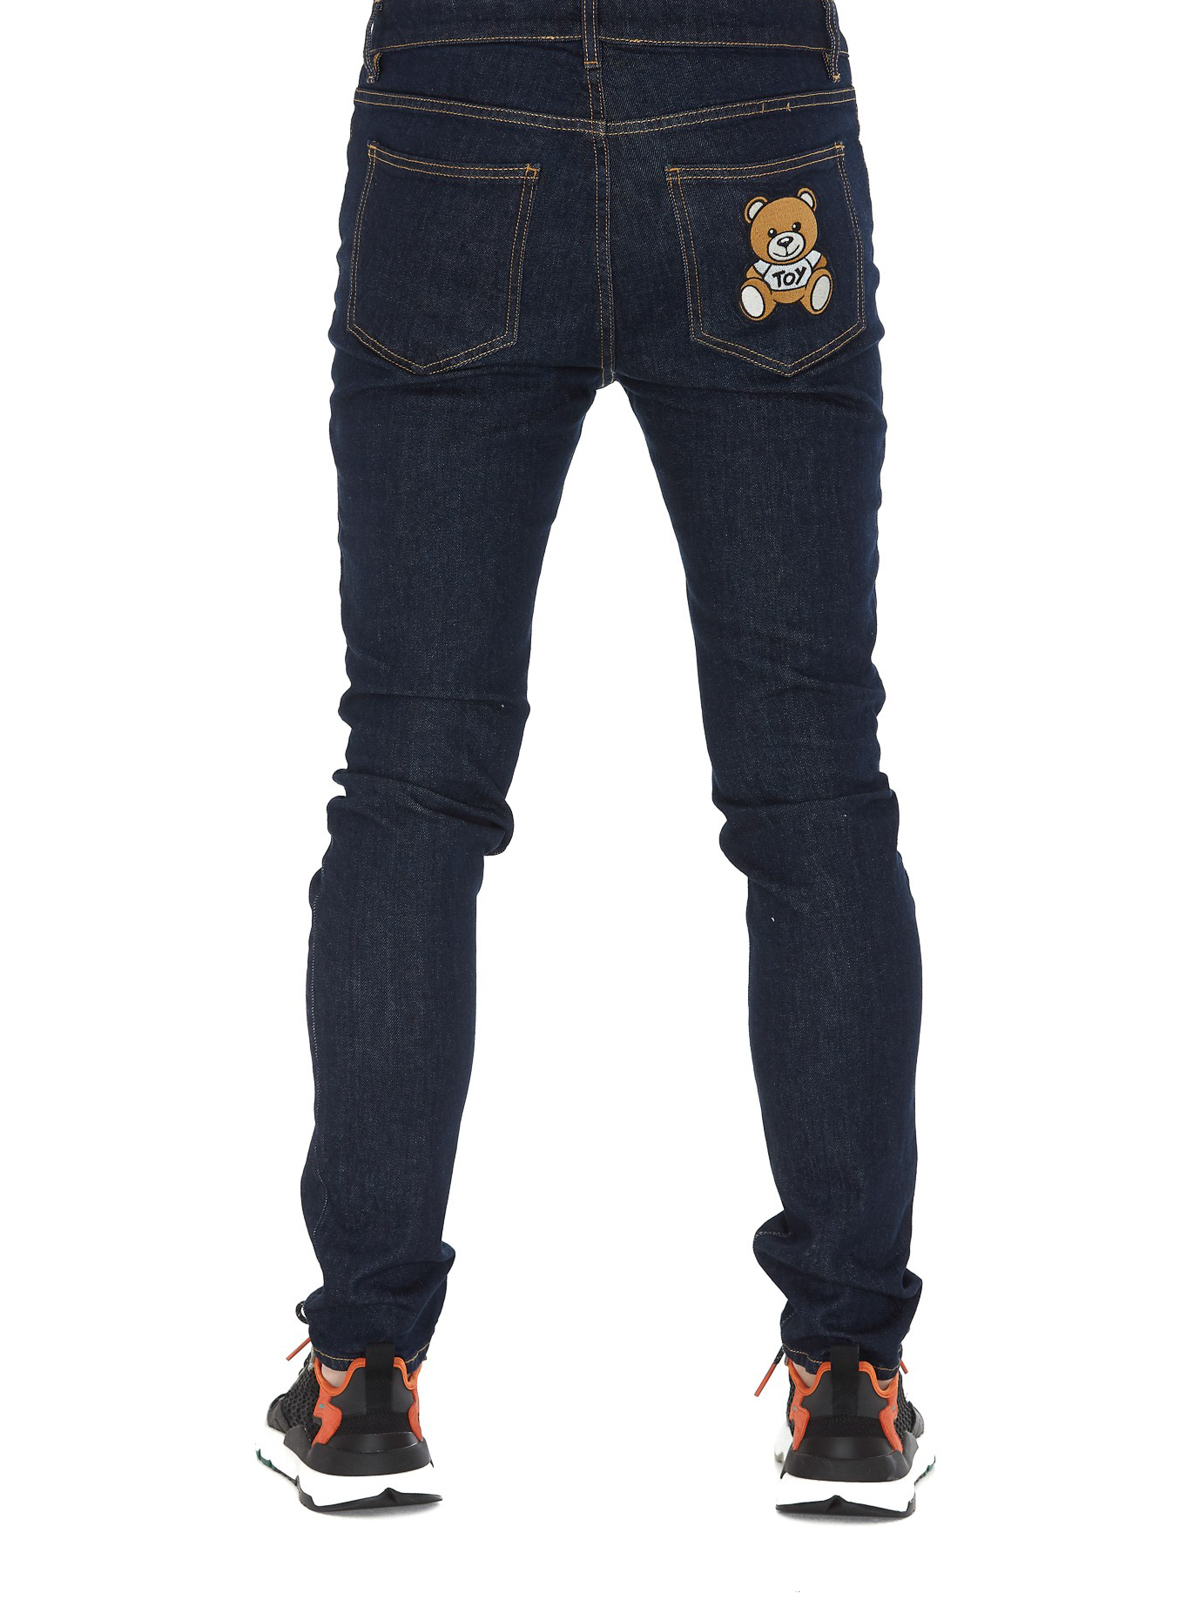 leg jeans - Teddy Bear patch denim jeans - 033870211510